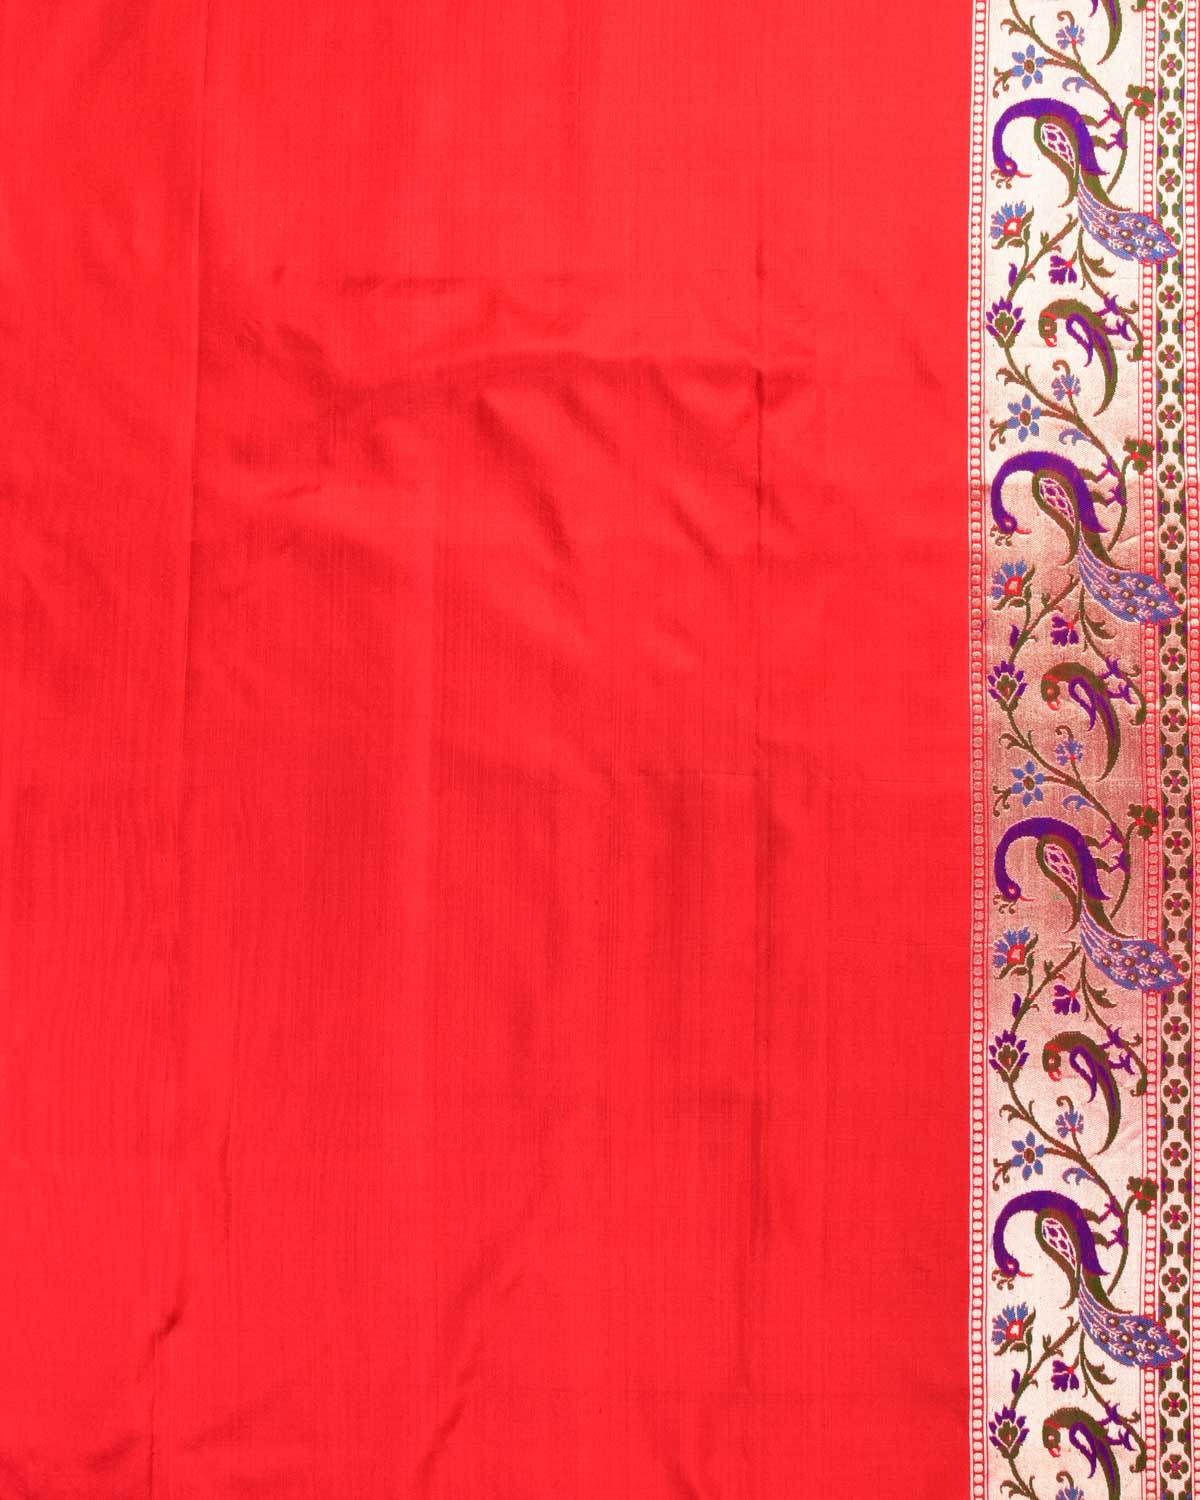 Black Banarasi Gold Zari Paithani Cutwork Brocade Handwoven Katan Silk Saree with Contrast Red Border & Pallu - By HolyWeaves, Benares